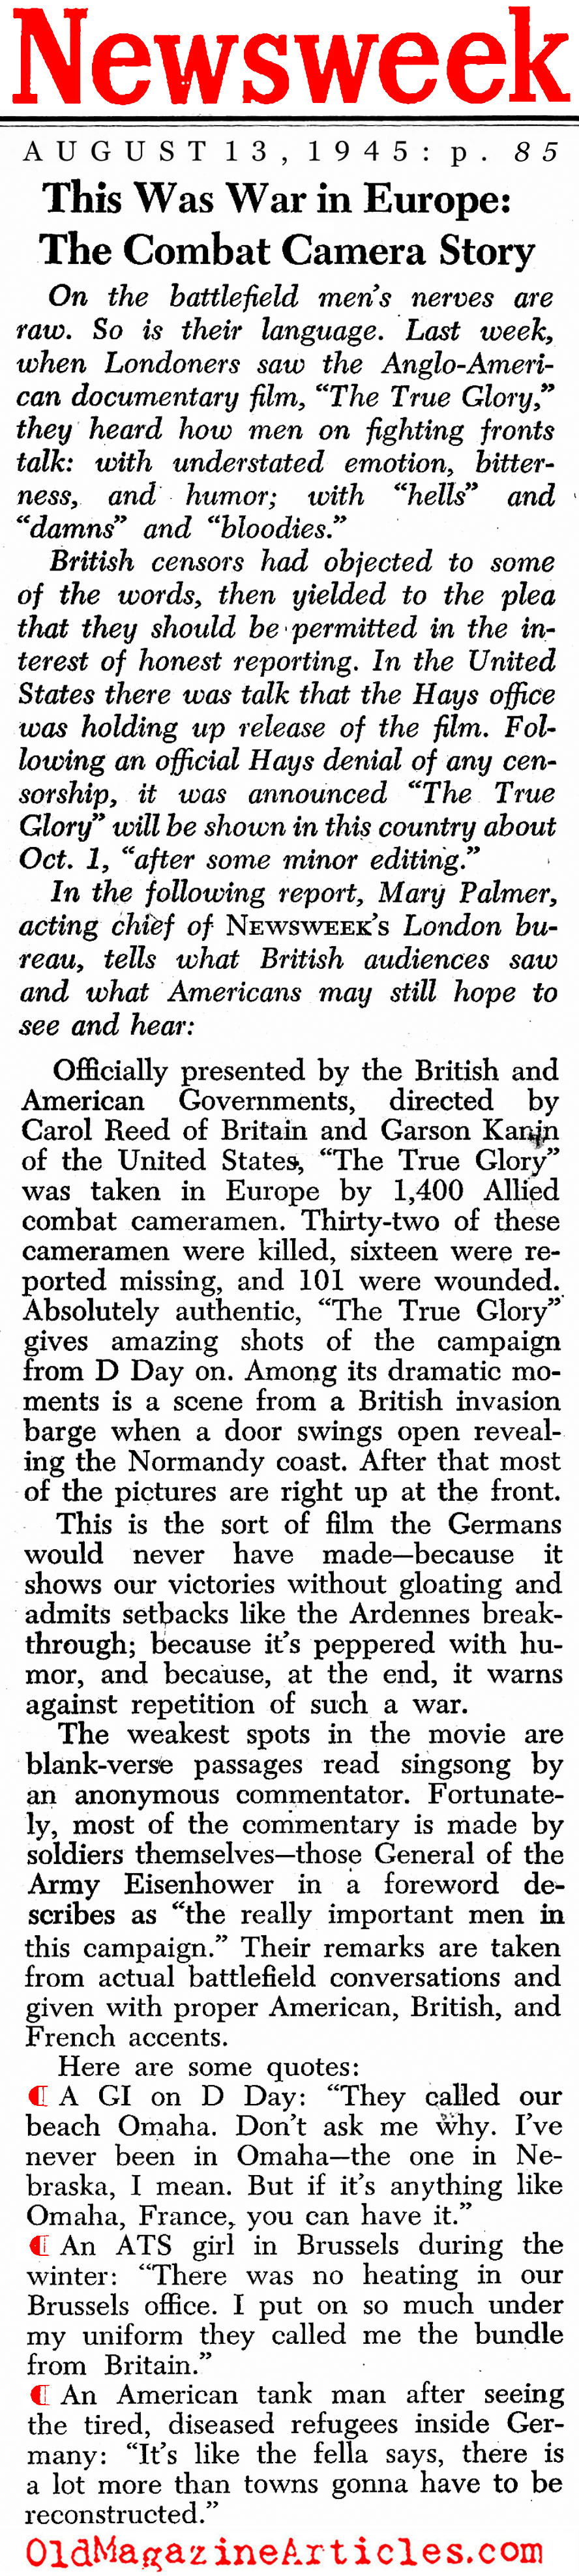 Filming the War (Newsweek Magazine, 1945)